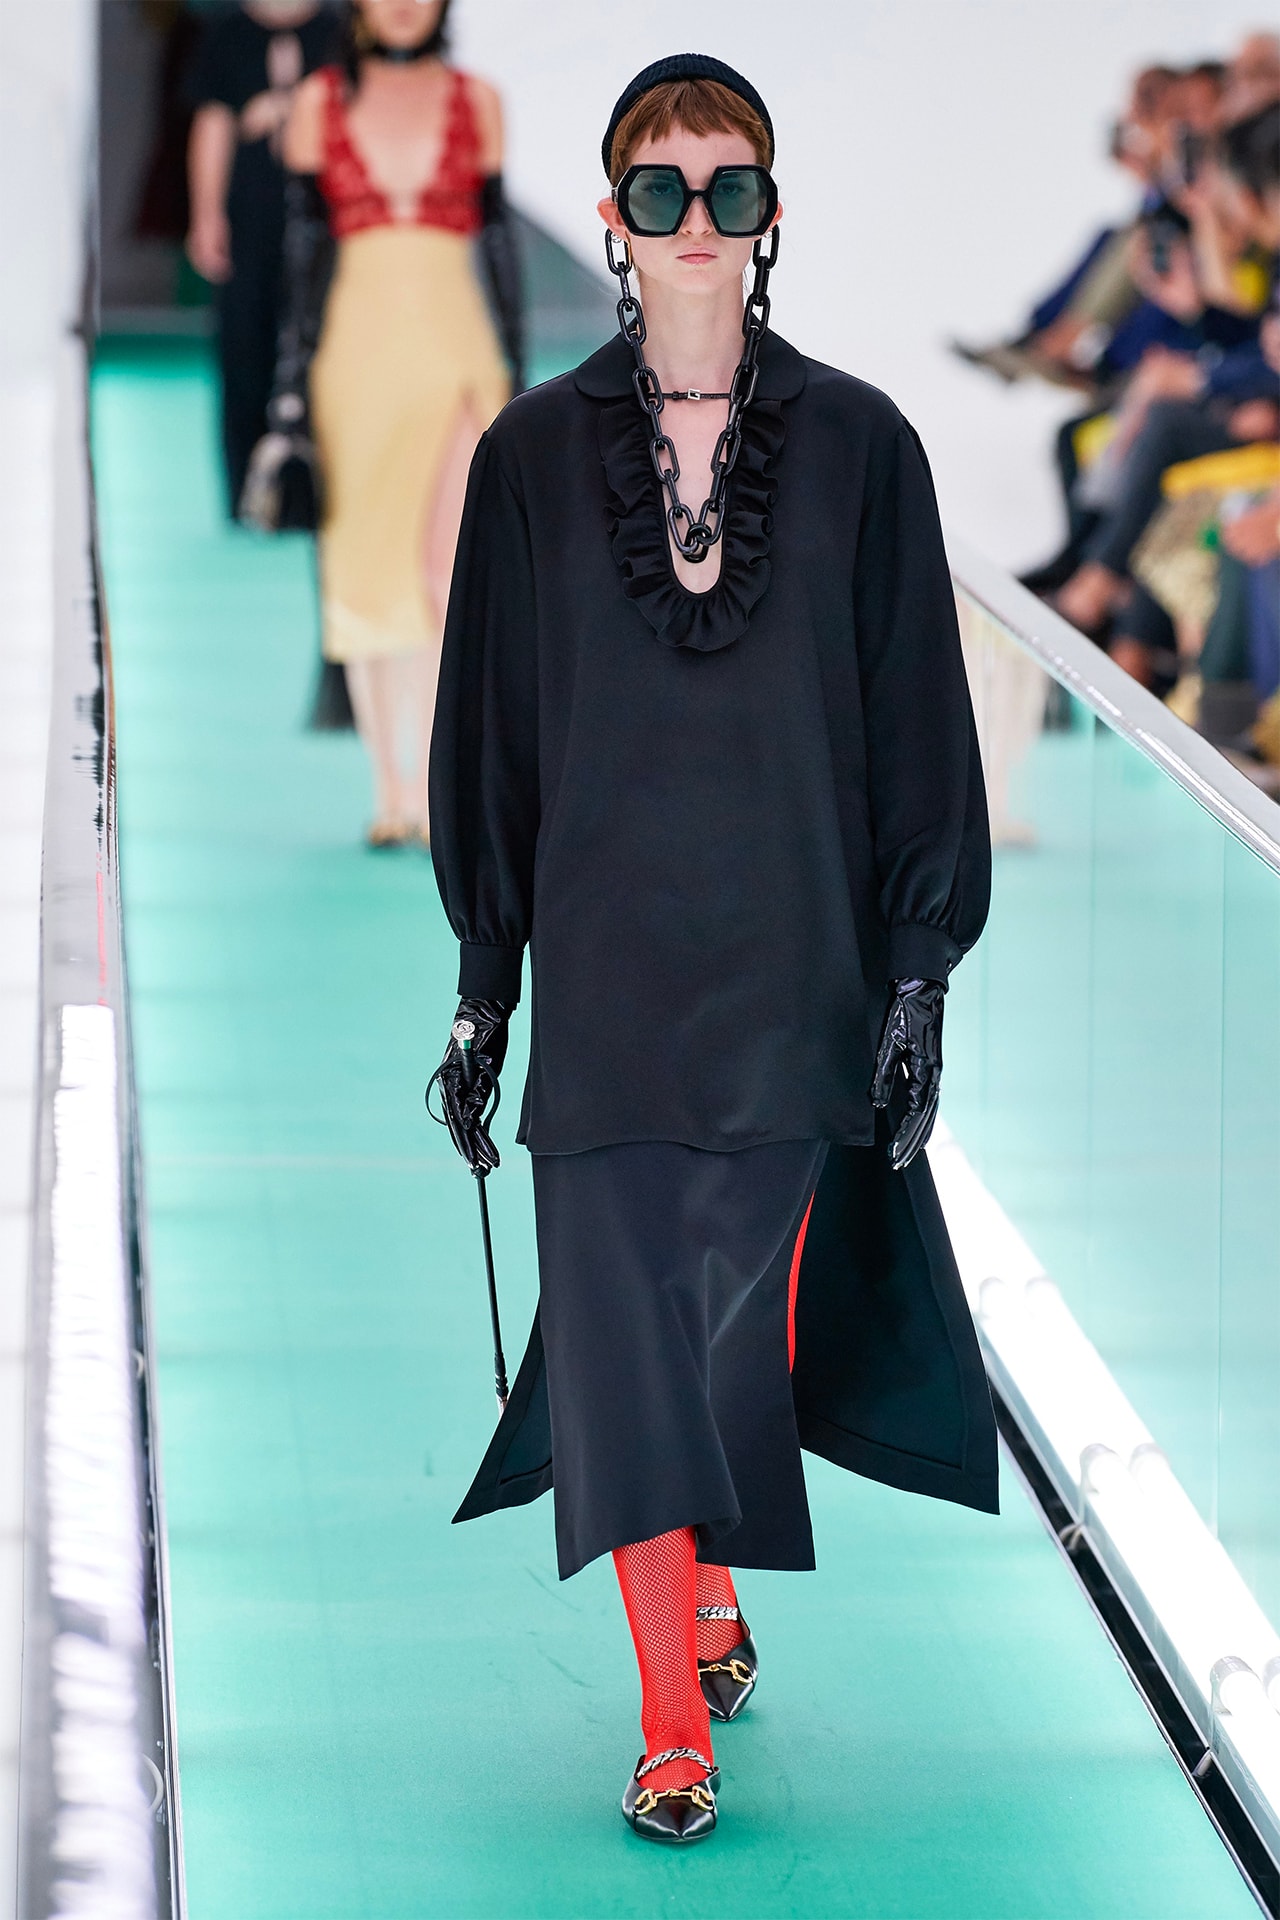 Gucci Orgasmique Spring Summer 2020 Runway Show Milan Fashion Week SS20 black dress flogger